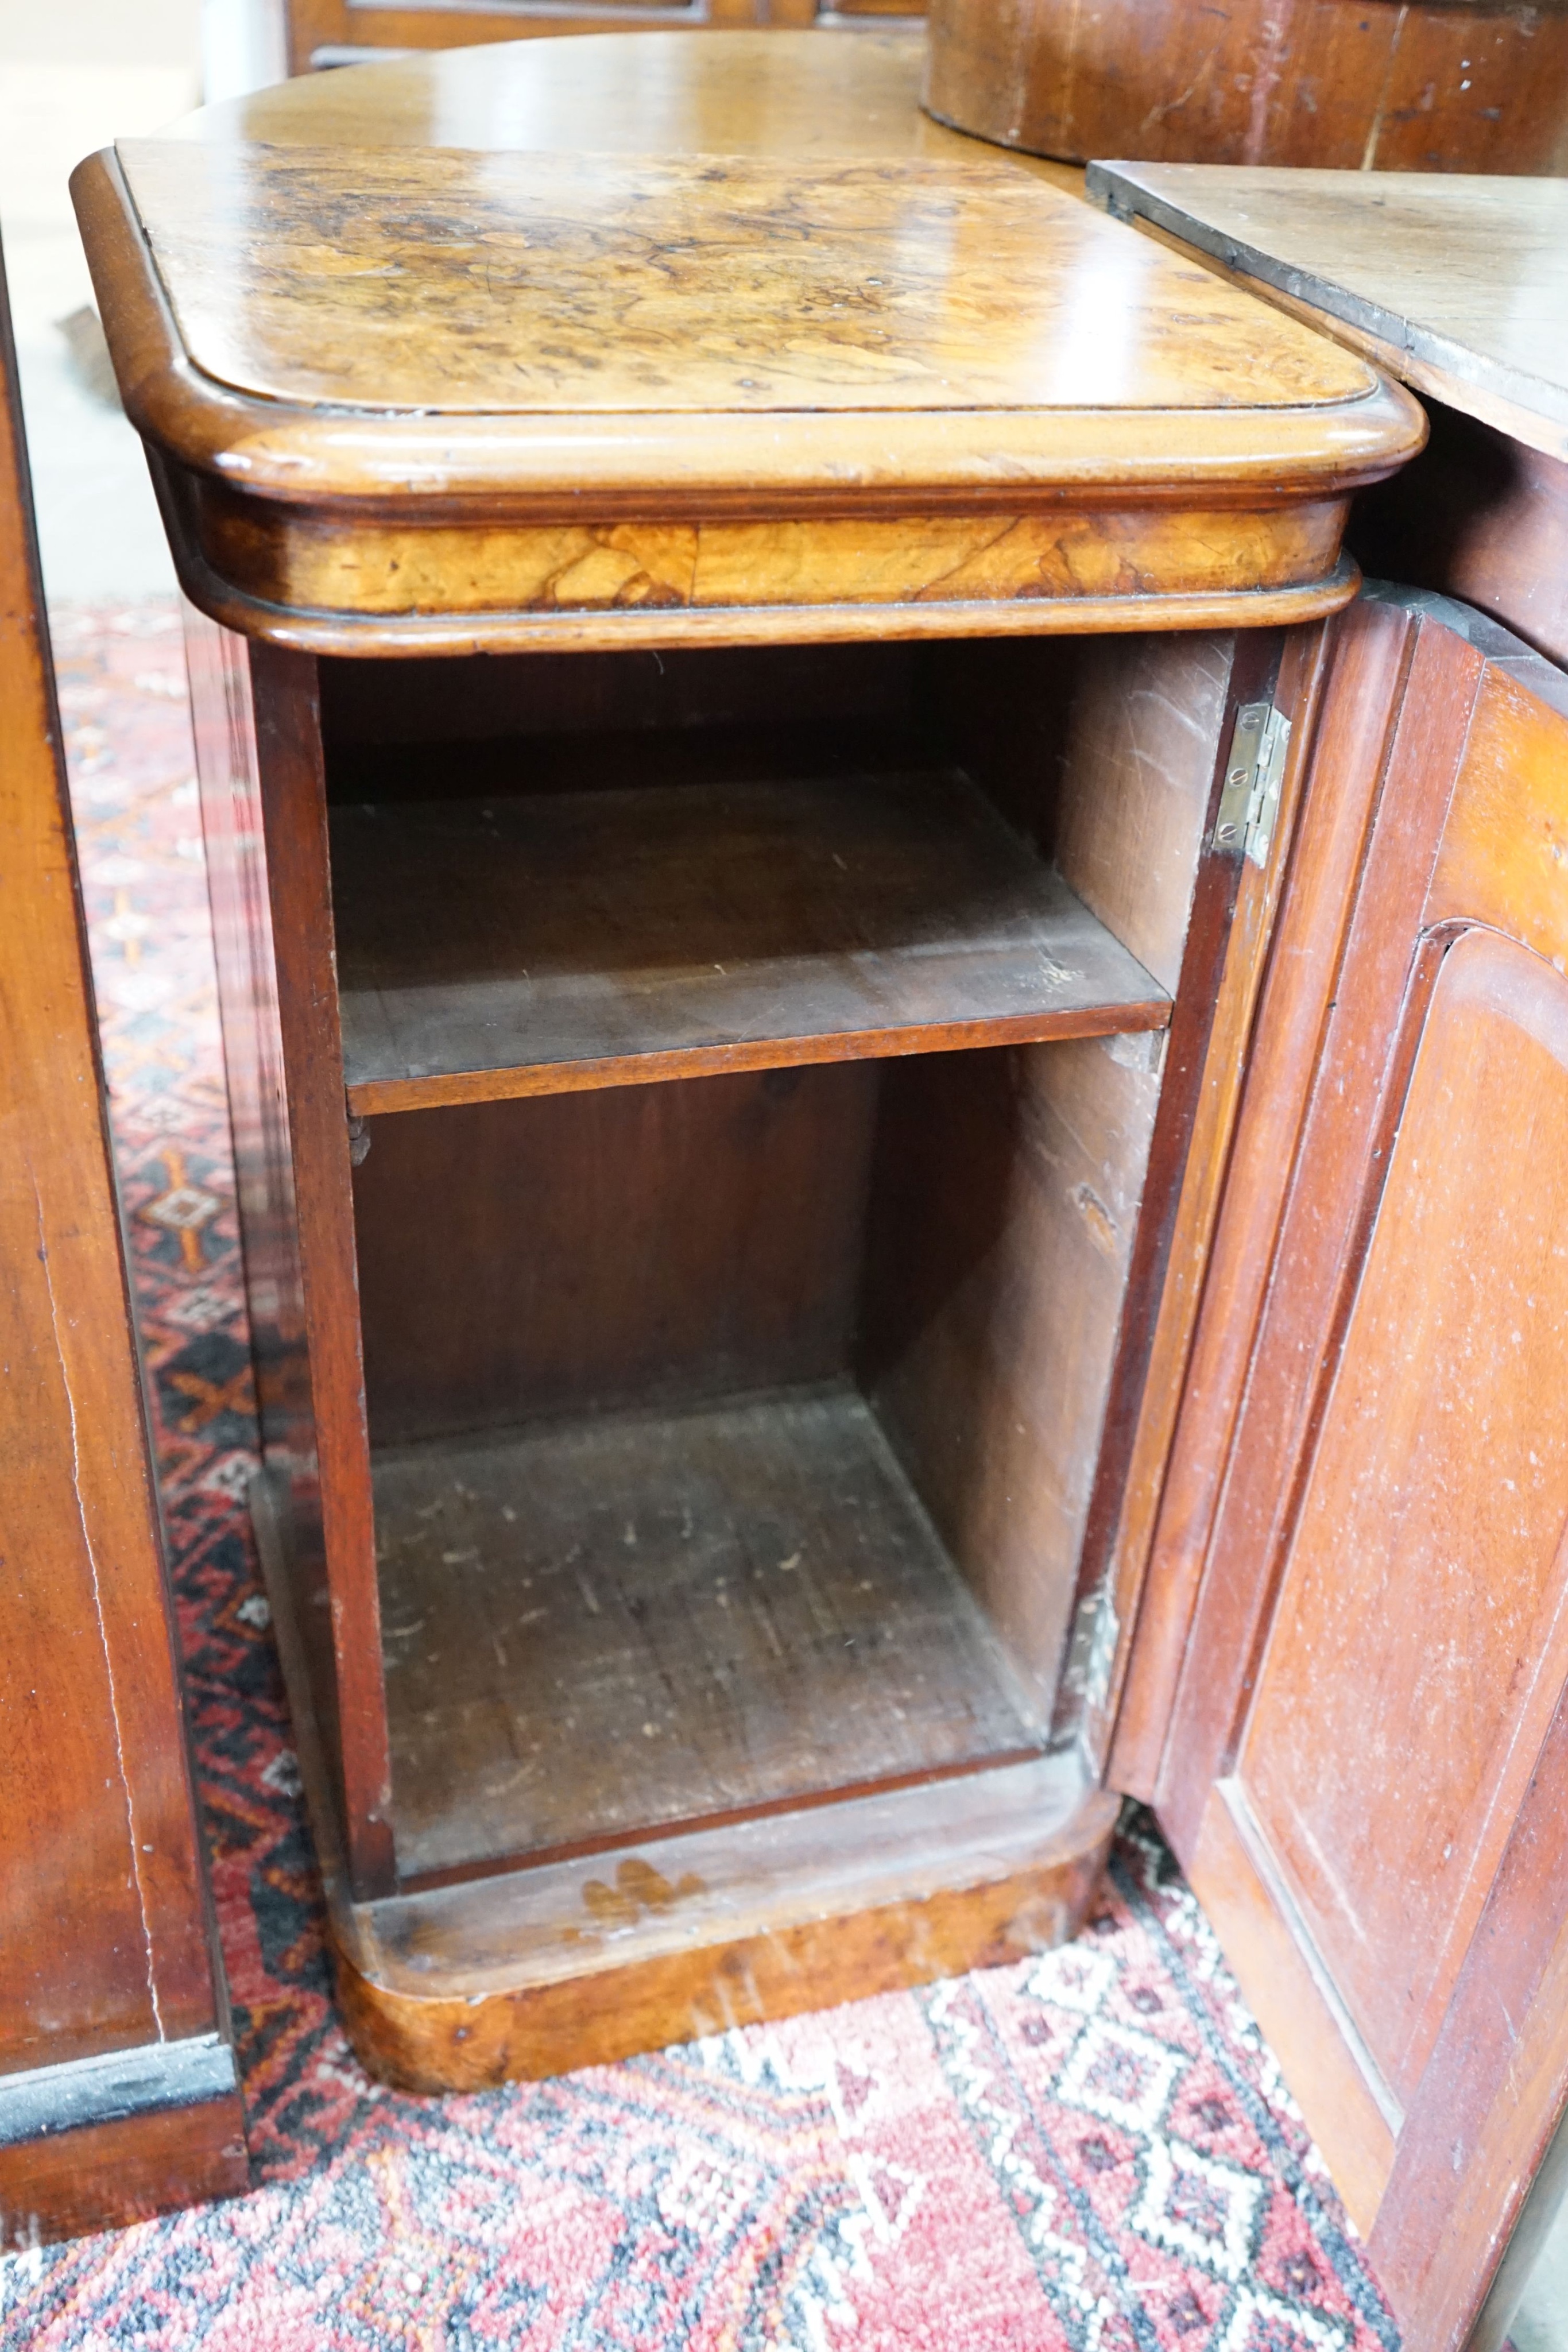 A Victorian figured walnut bedside cabinet, width 42cm, depth 38cm, height 75cm